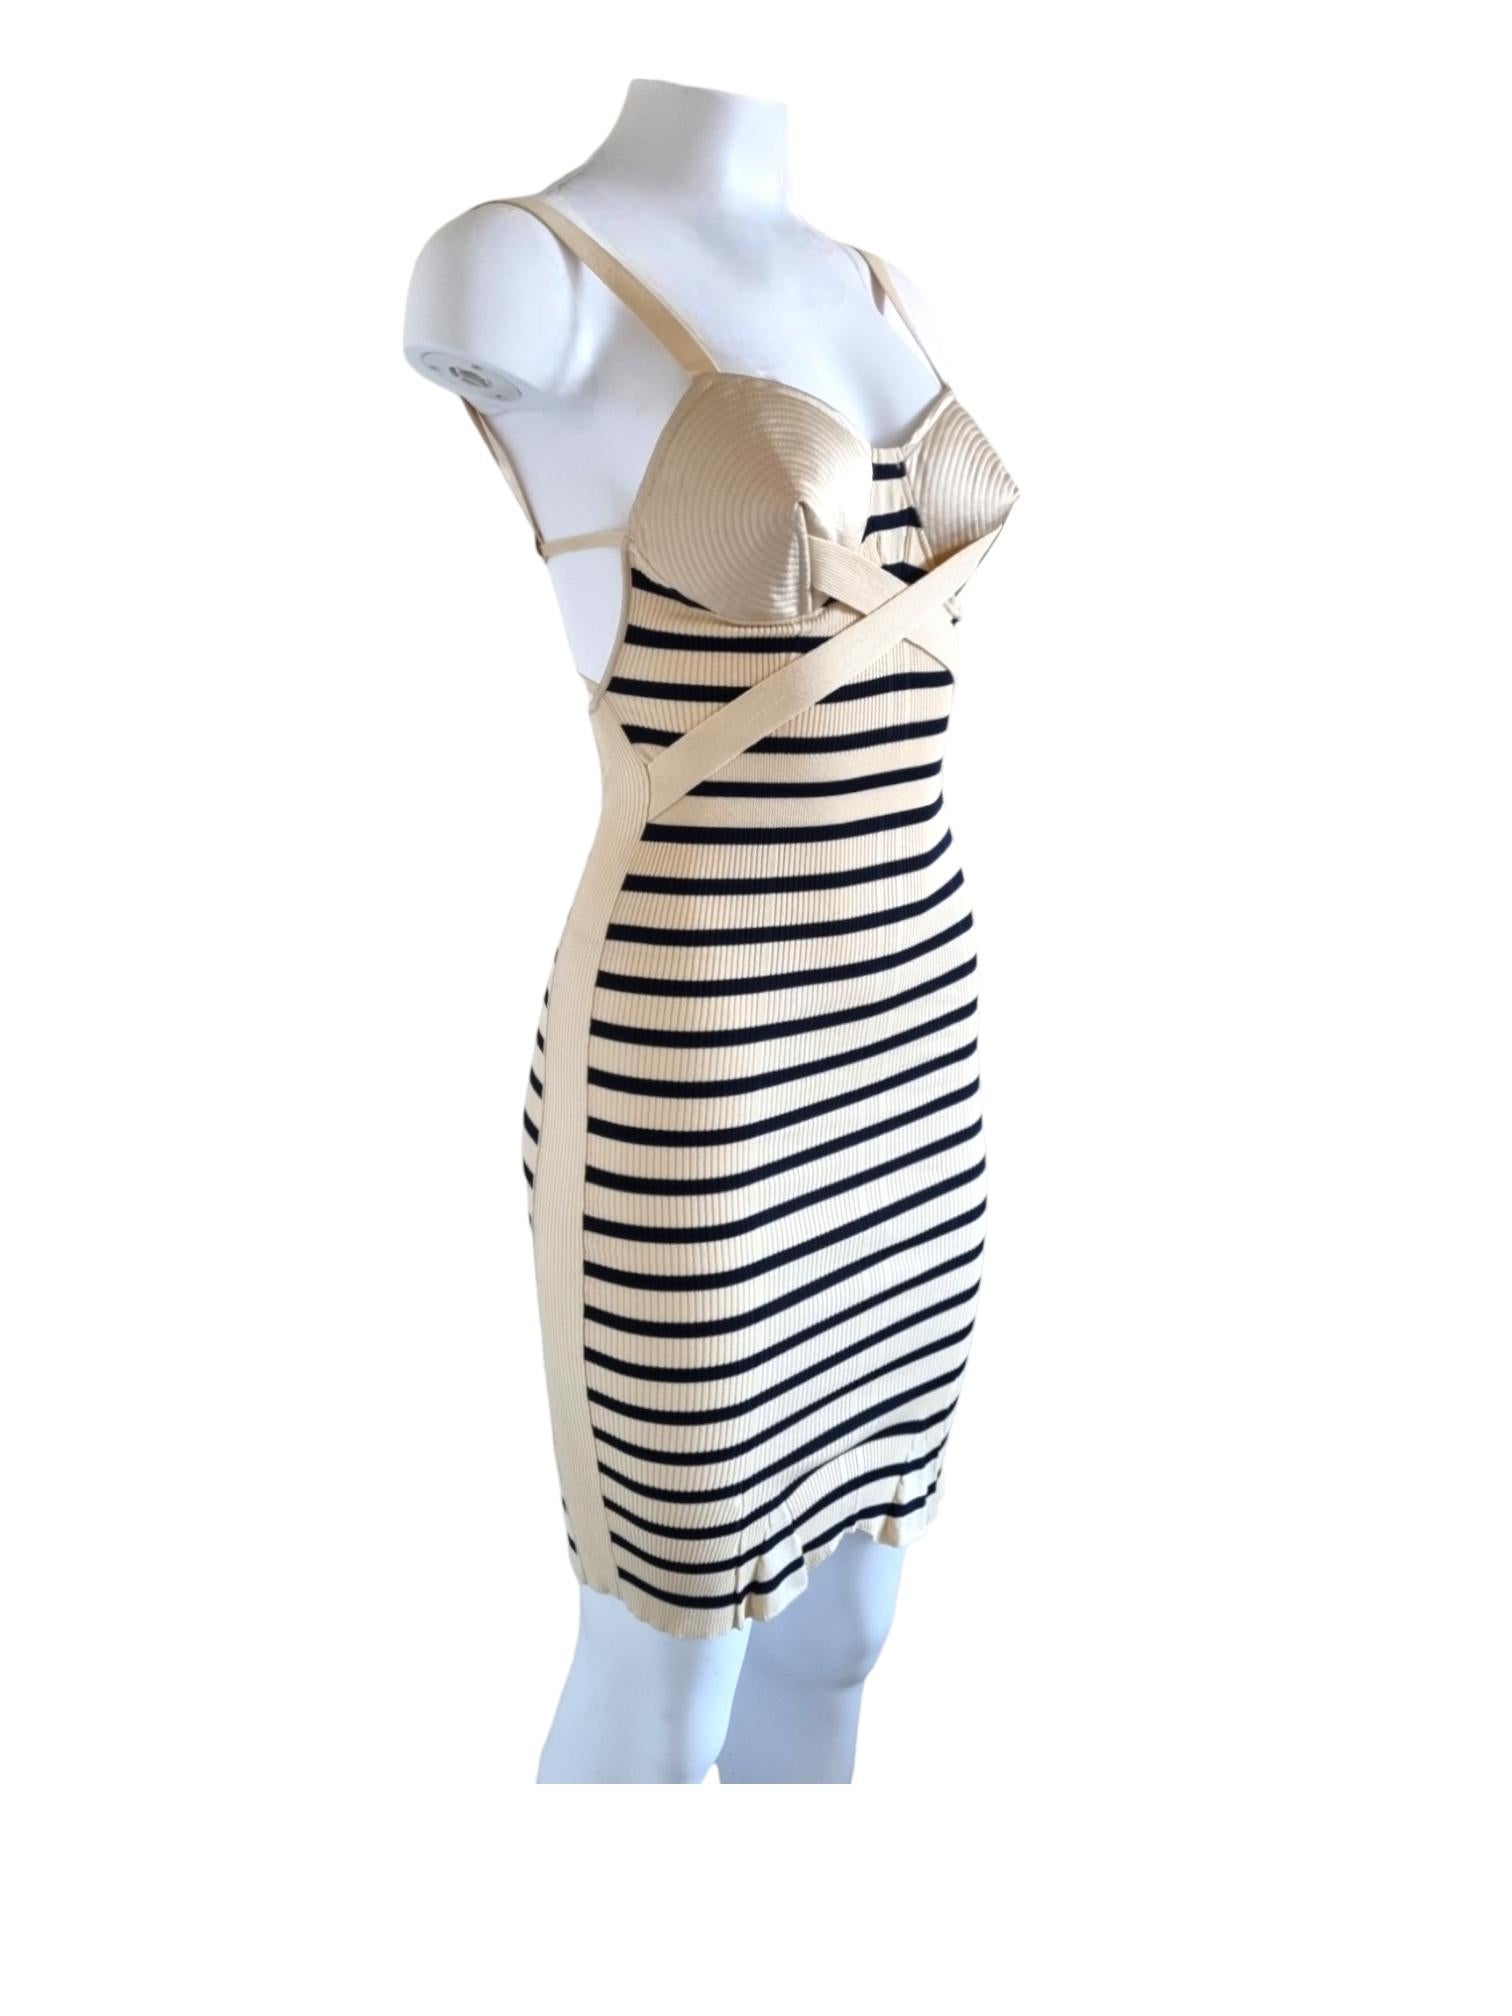 Beige Jean Paul Gaultier Sailor Cone dress 1990's For Sale